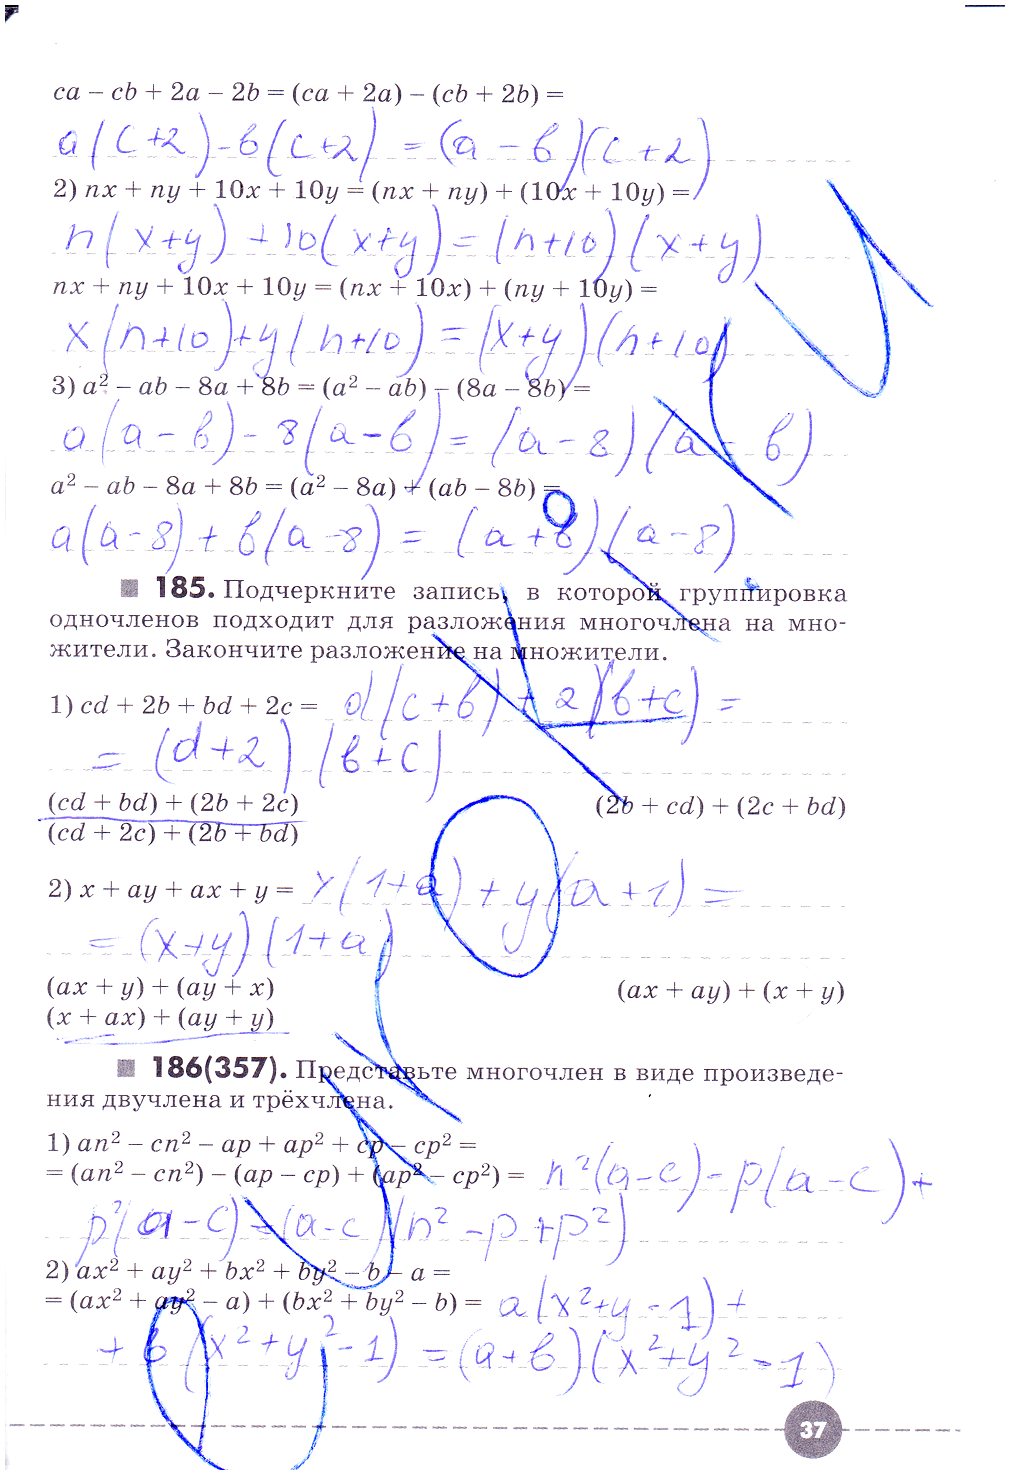 гдз 7 класс рабочая тетрадь часть 2 страница 37 алгебра Муравин, Муравина